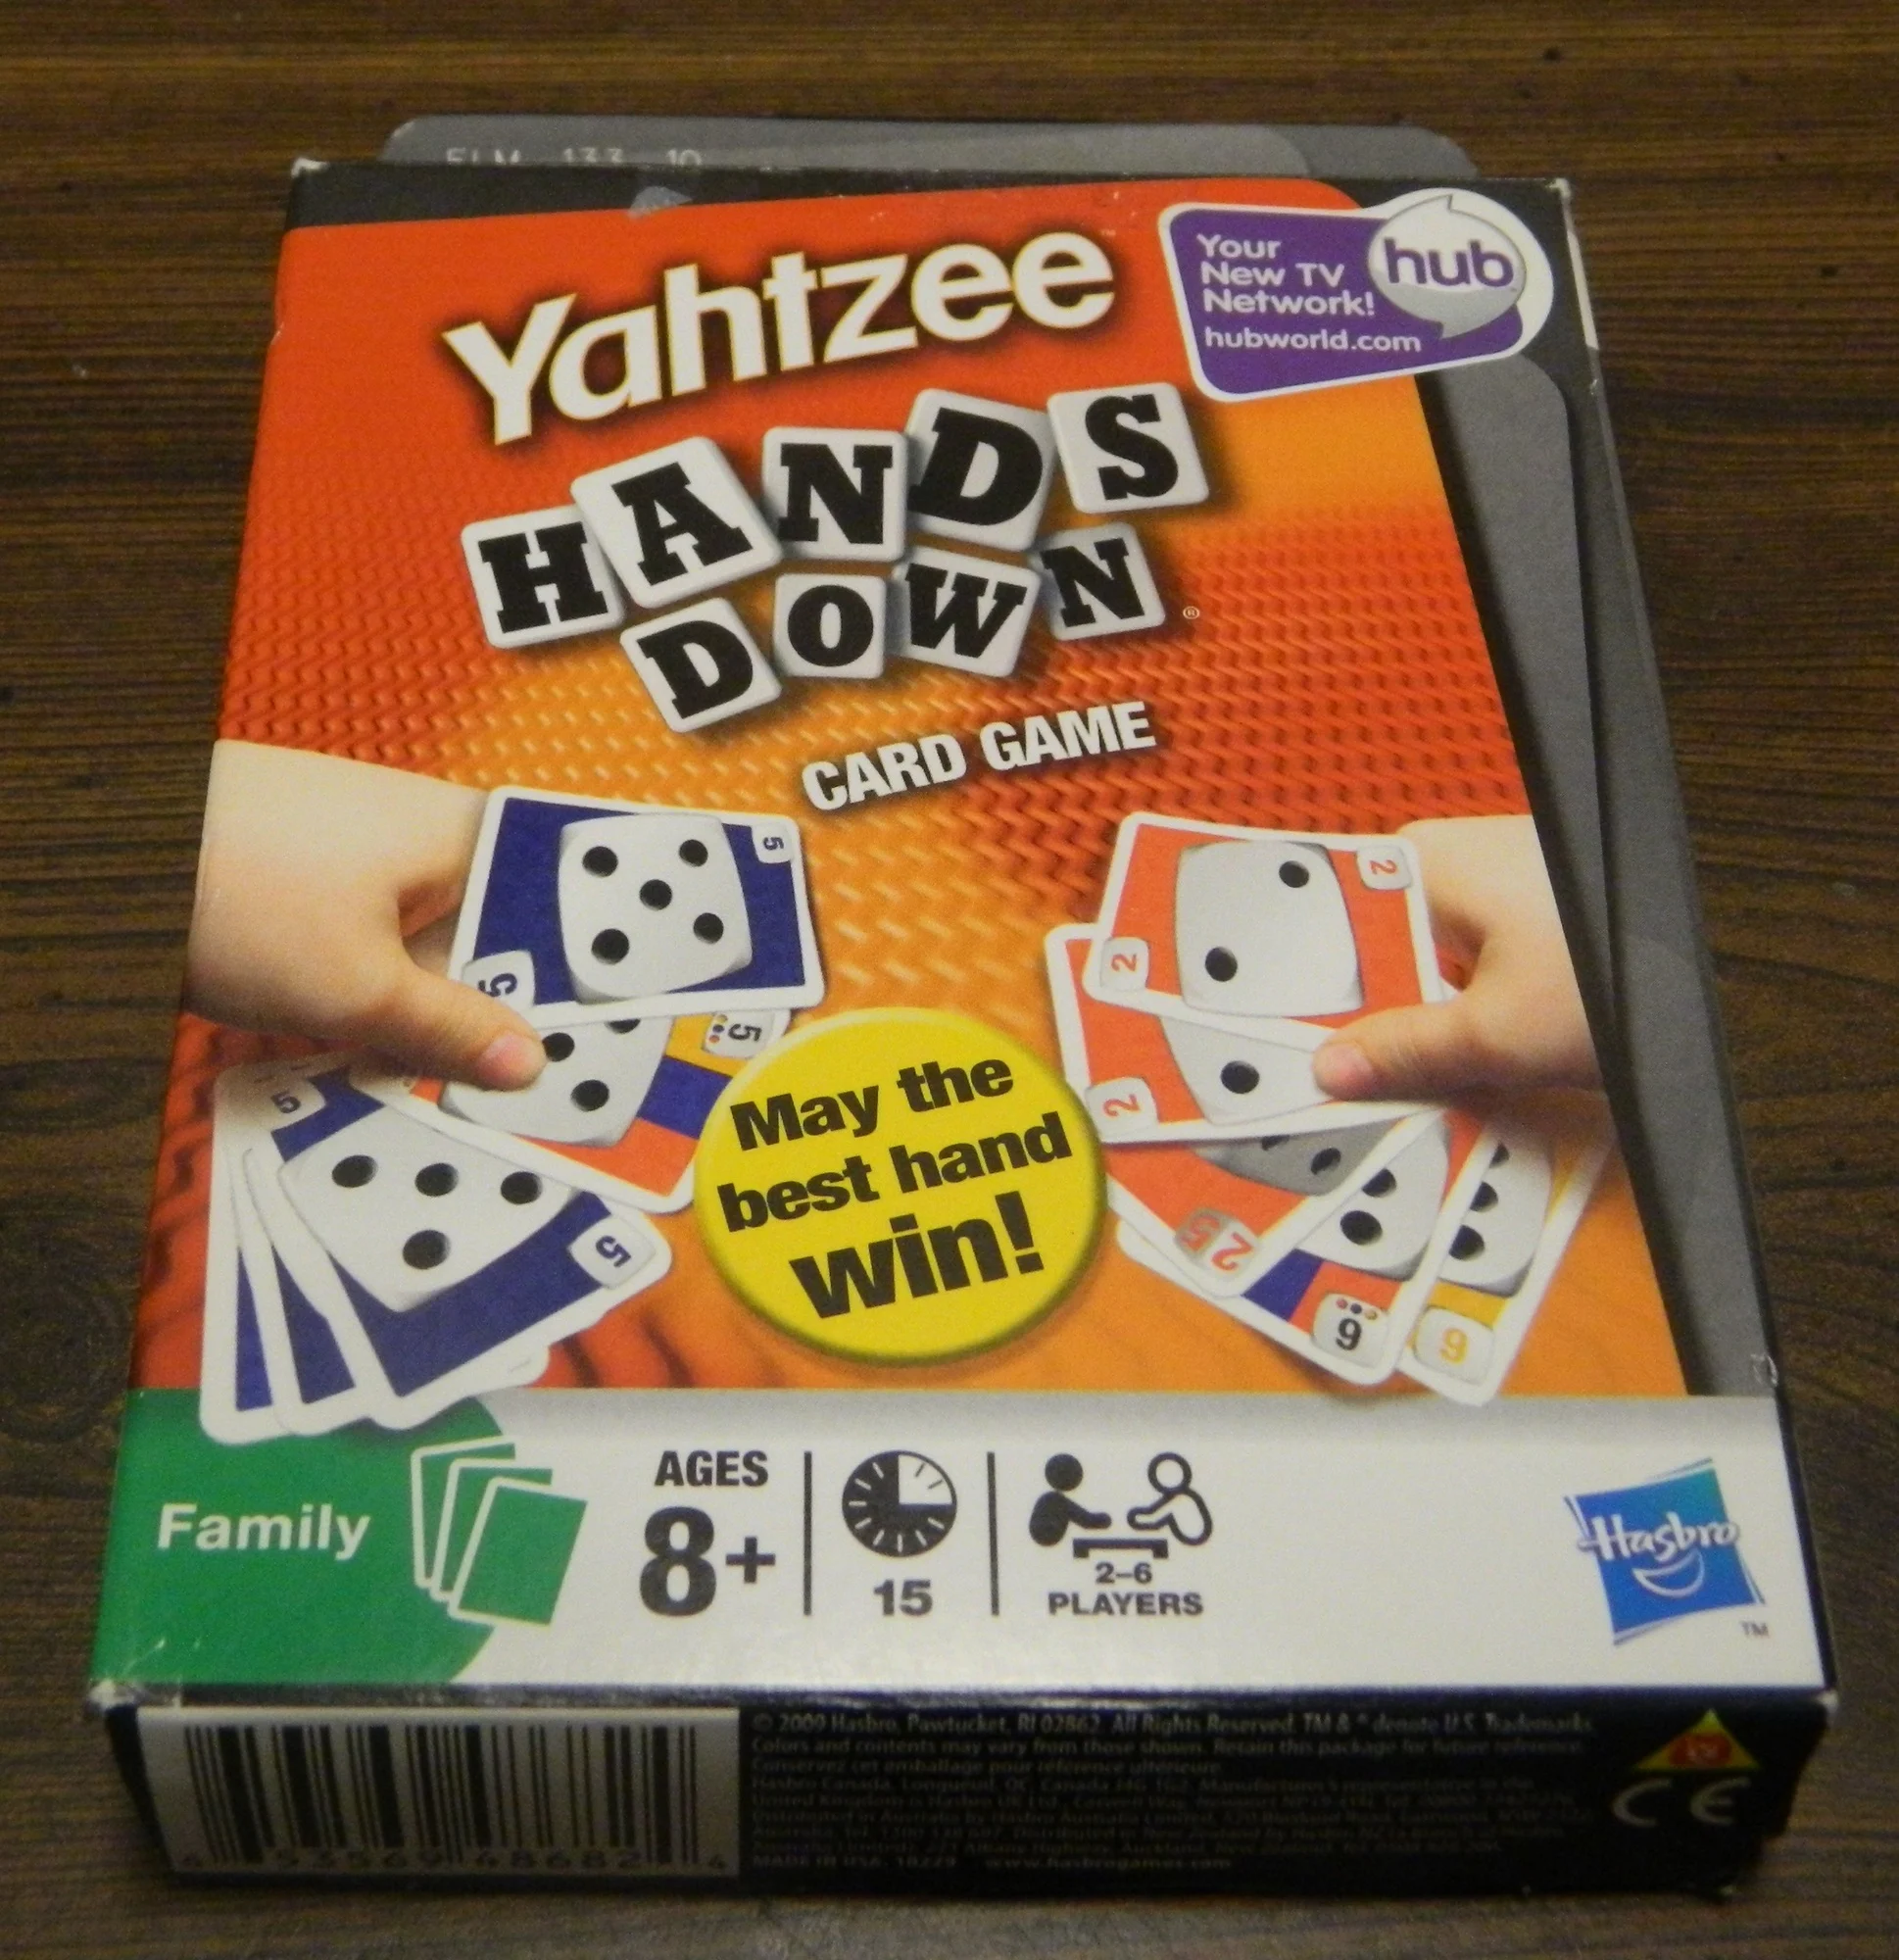 Box for Yahtzee Hands Down